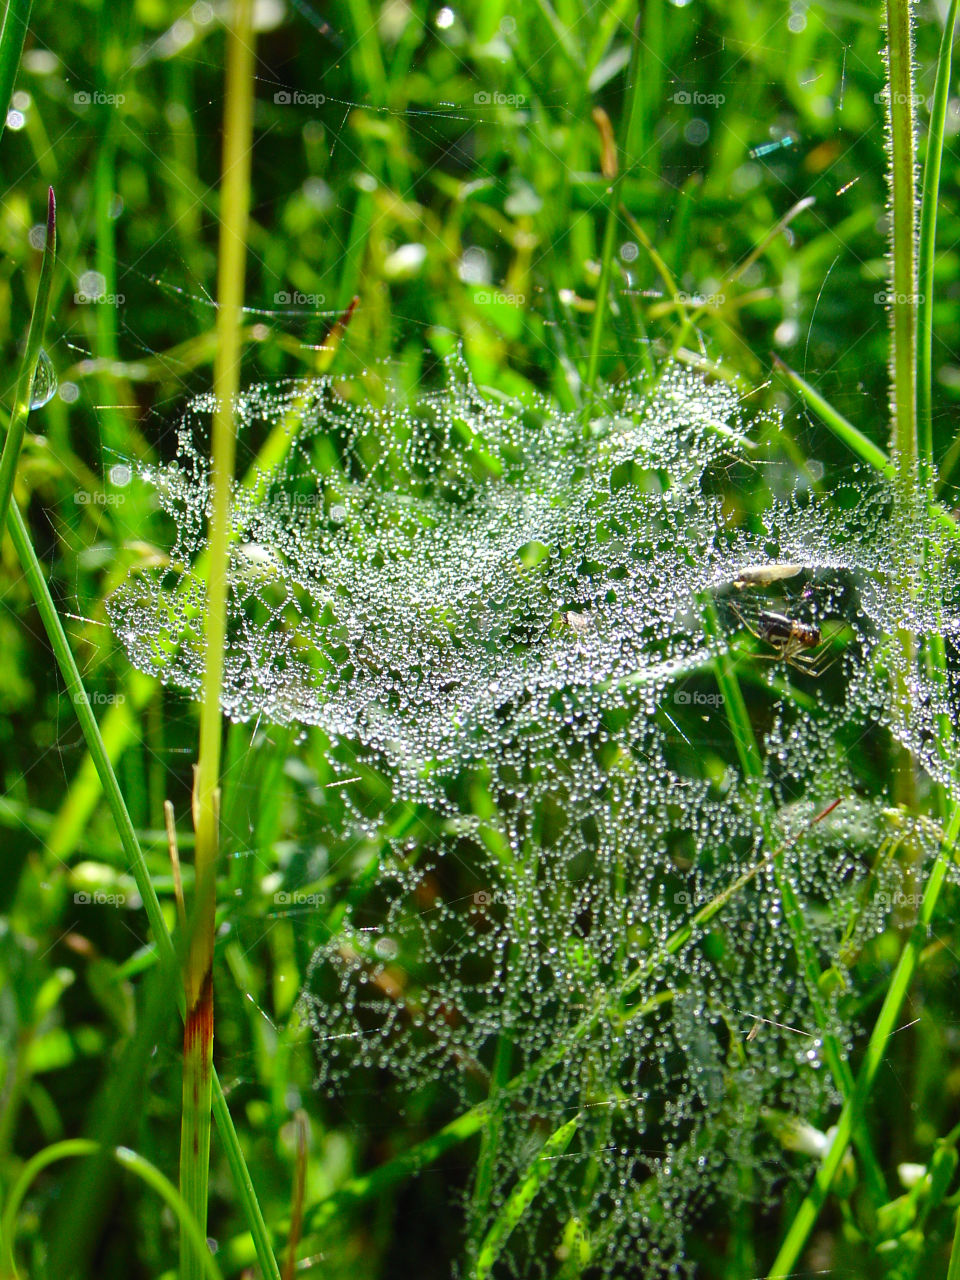 Raindrops on the spiderweb